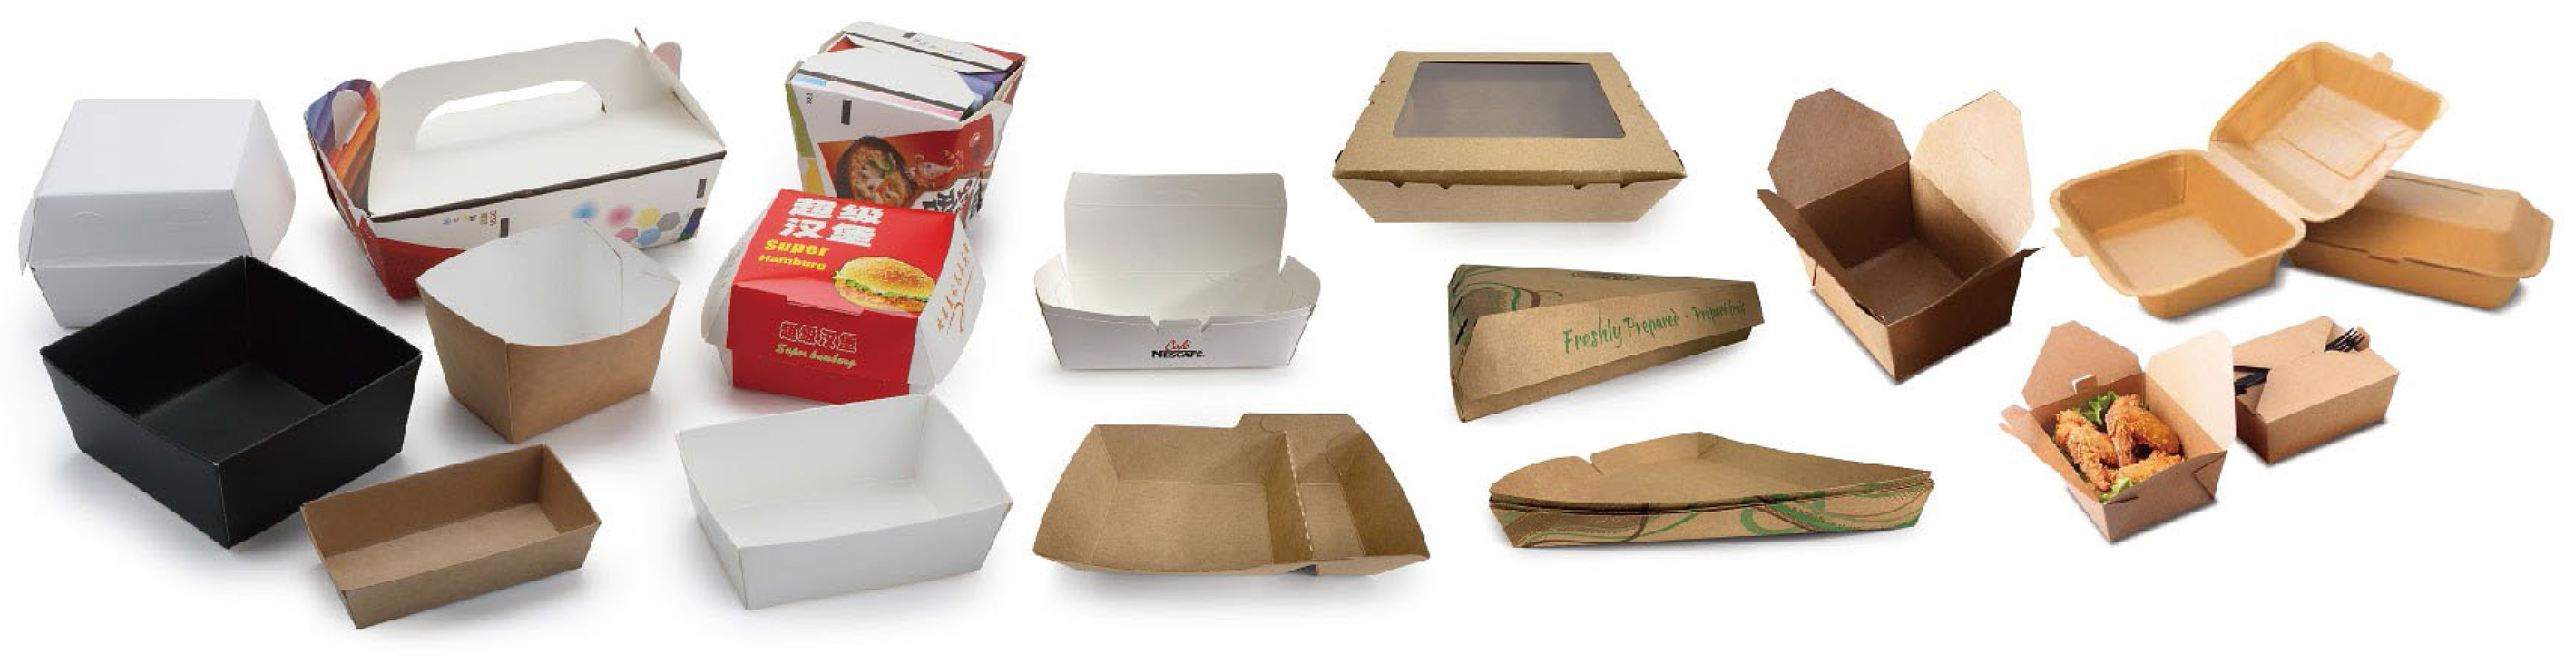 Apolo - PackFood - Máquinas de Embalagens para Fast Food & Delivery - Copos, caixas, tampas, pratos... de papel